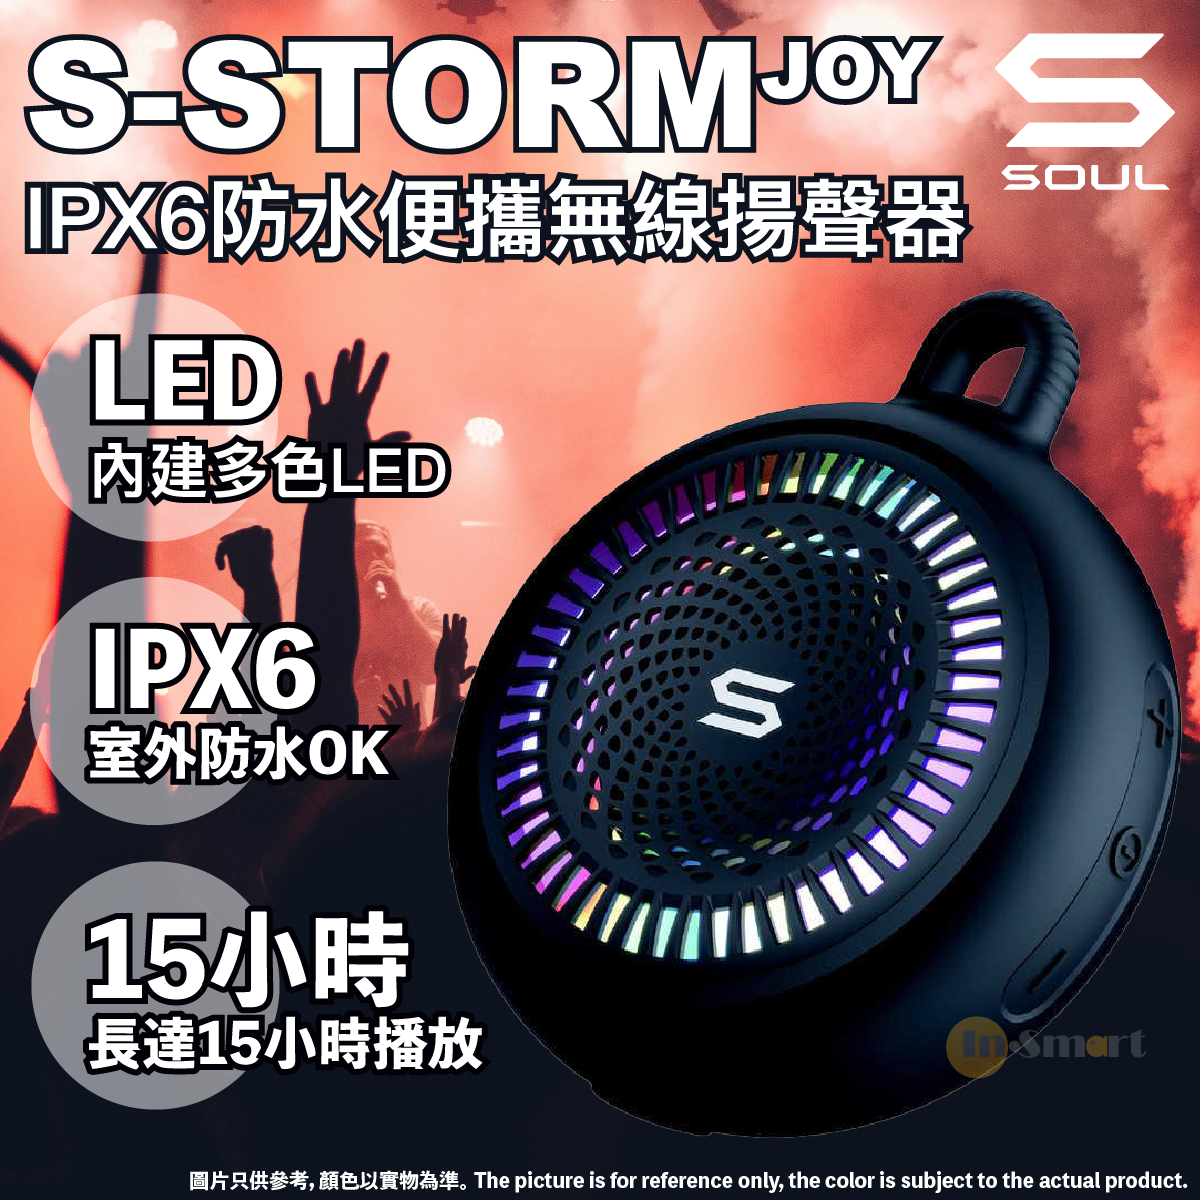 Soul S-STORM JOY LED Bluetooth Speaker Black SS89BK